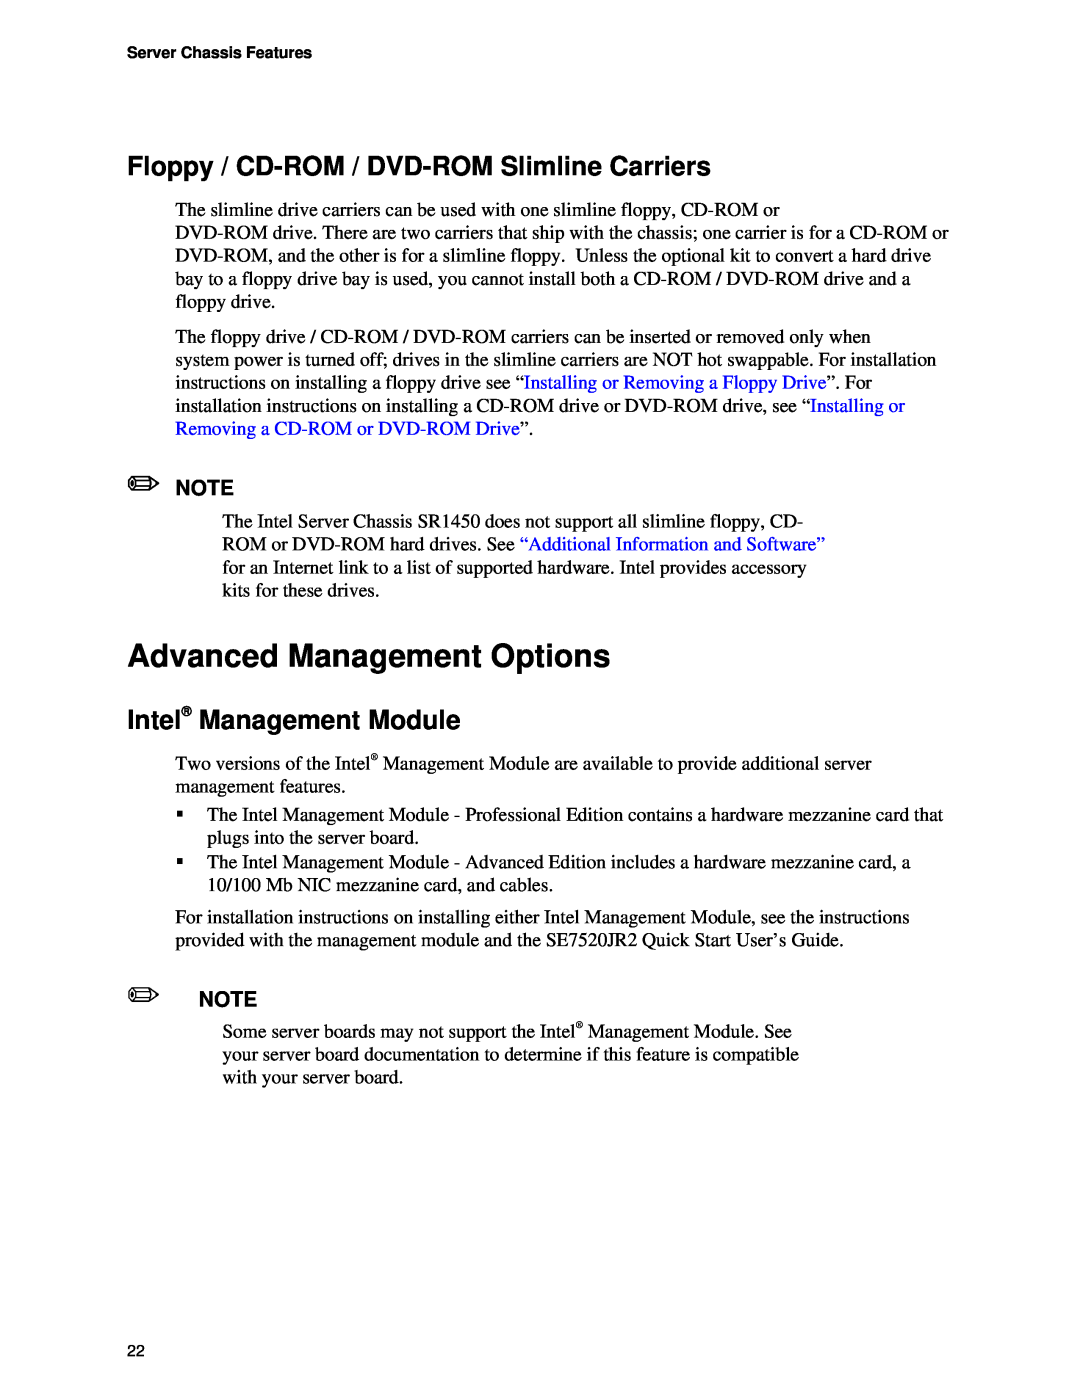 Intel SR1450 manual Advanced Management Options, Floppy / CD-ROM / DVD-ROMSlimline Carriers, Intel Management Module 